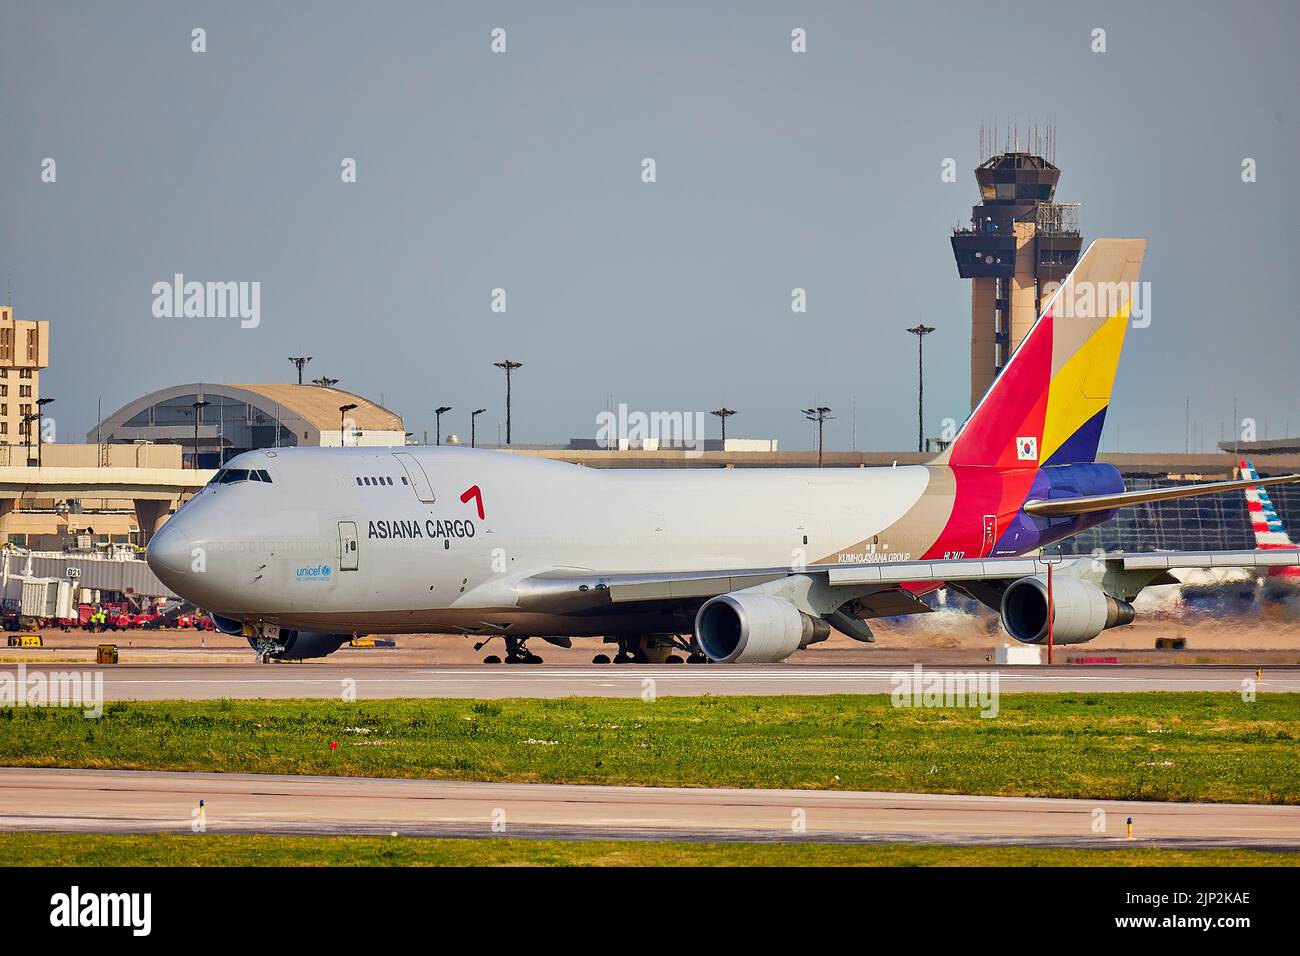 The  Asiana Cargo aircraft at DFW International Airport Stock Photo